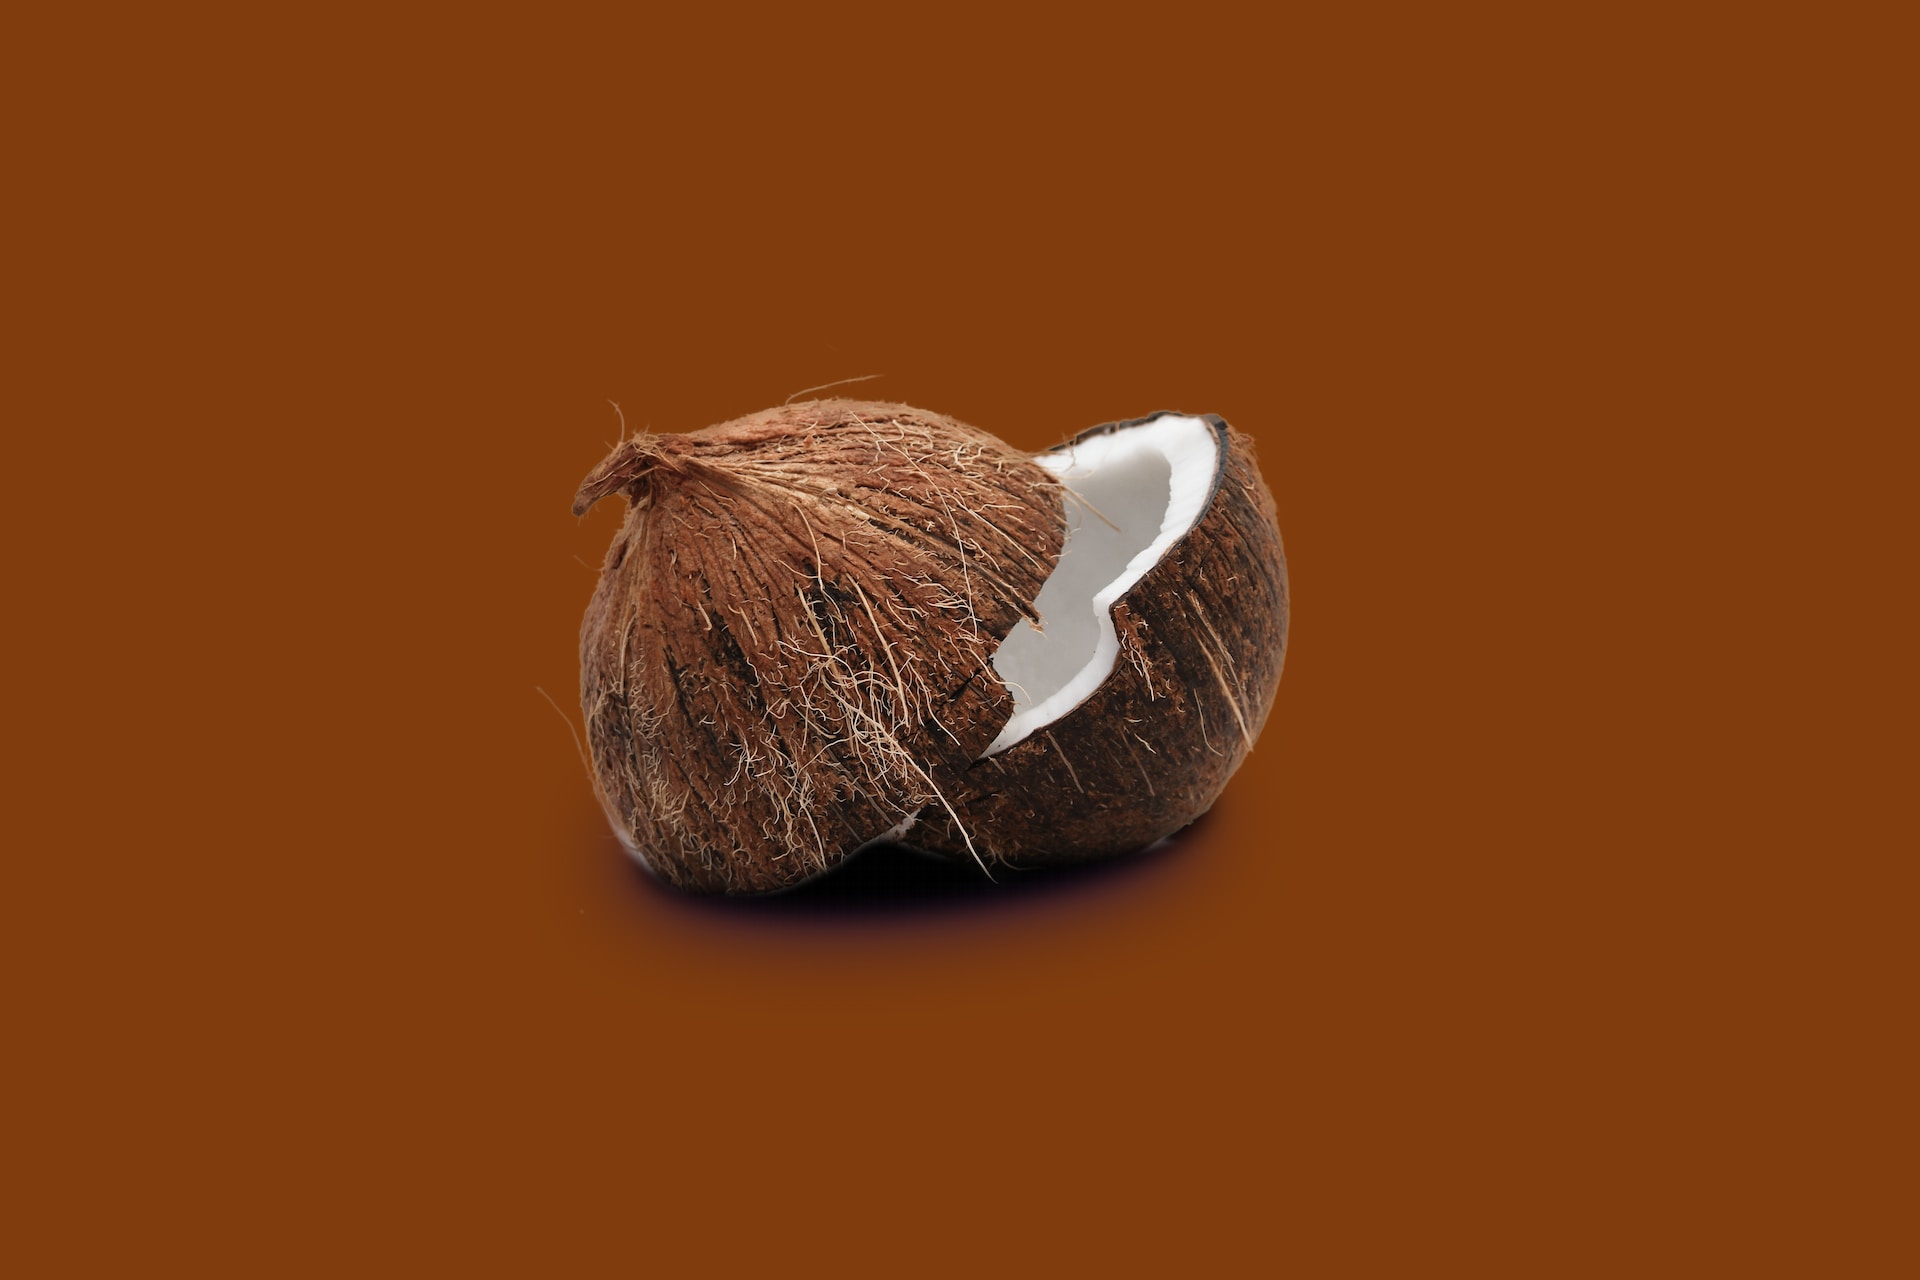 Coco Peat